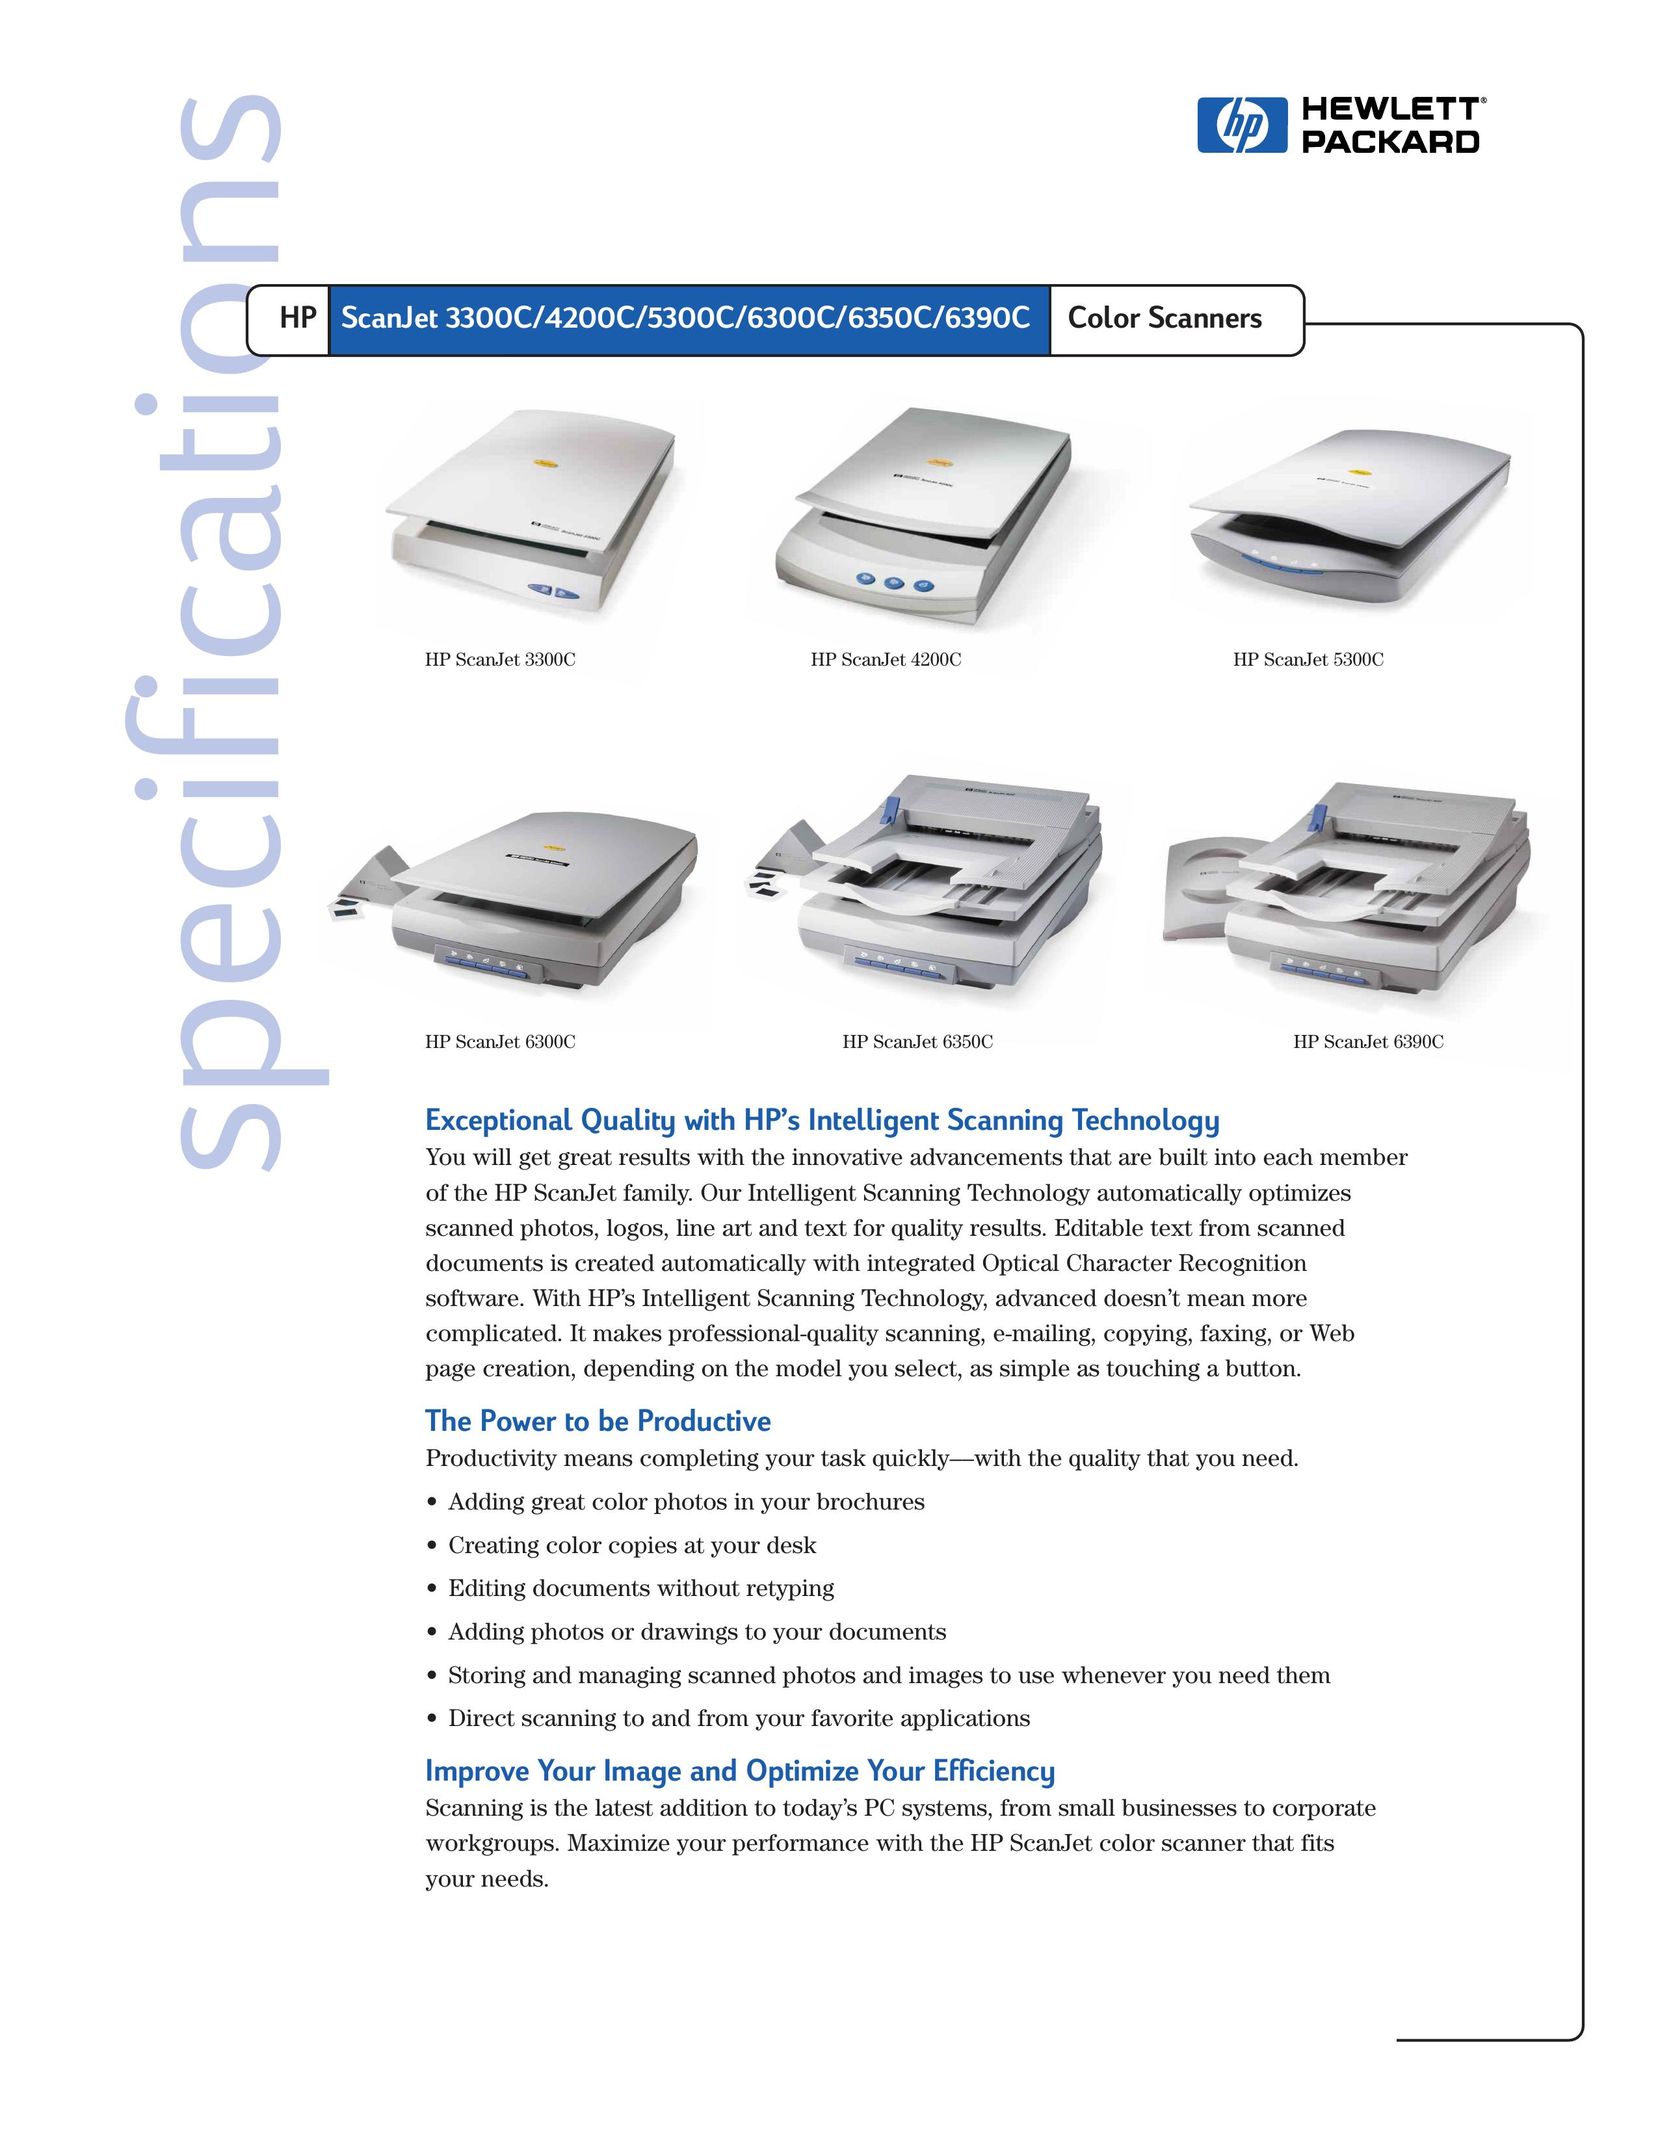 HP (Hewlett-Packard) 3300C Scanner User Manual